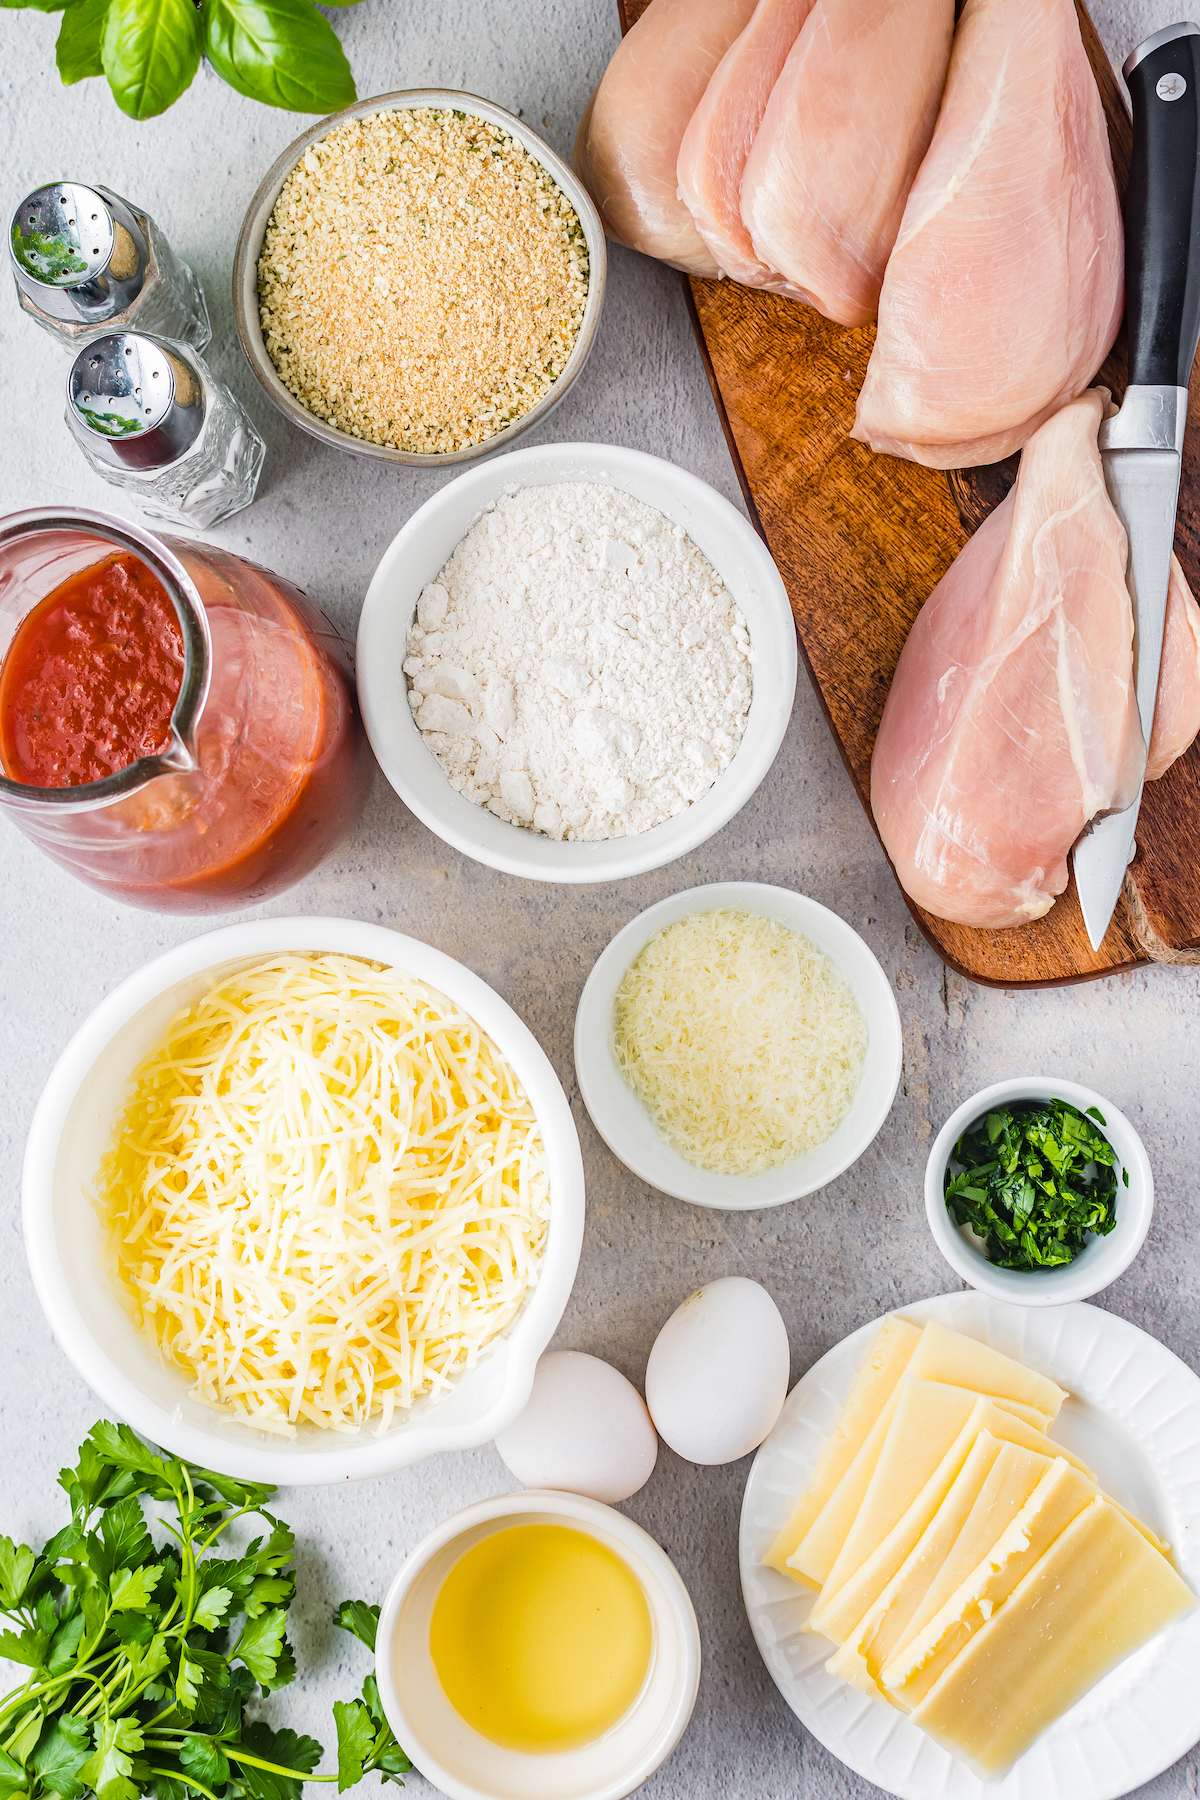 Ingredients for chicken parmesan.